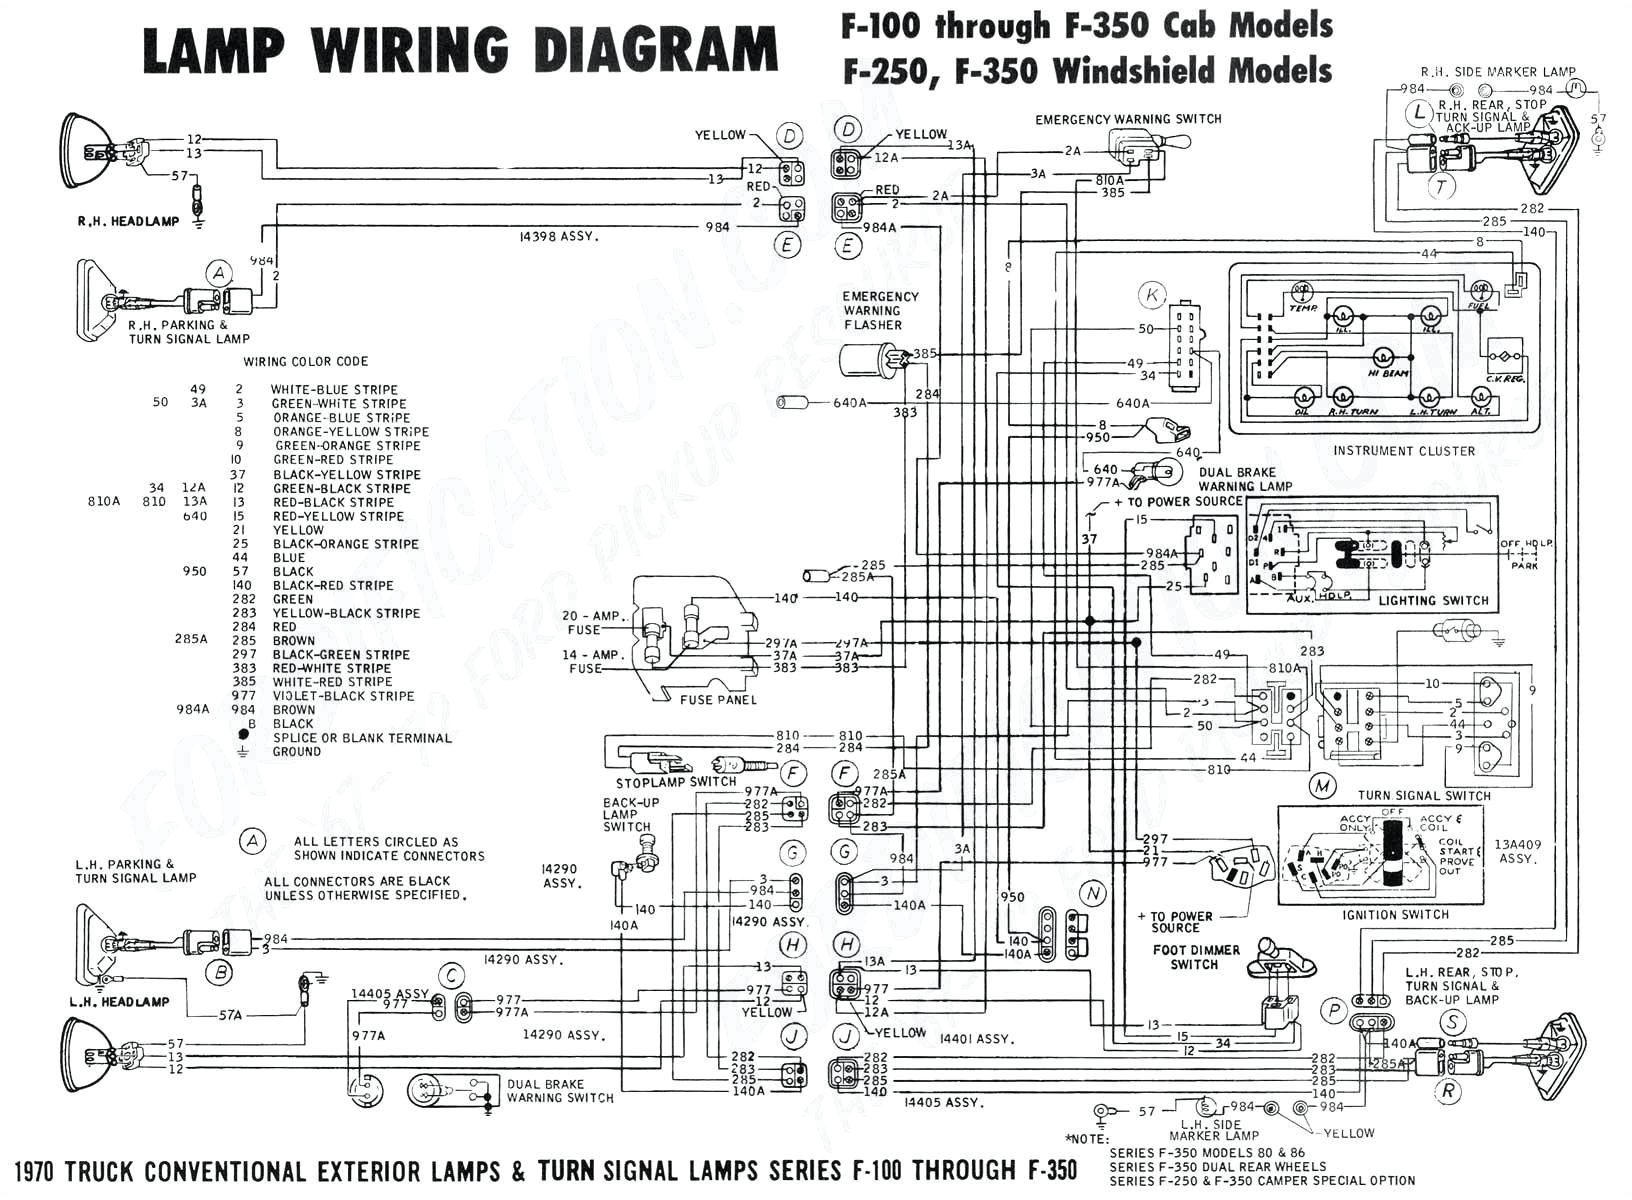 2014 ford Focus Wiring Diagram 2014 Nissan Titan Wiring Diagram Wiring Diagram Database